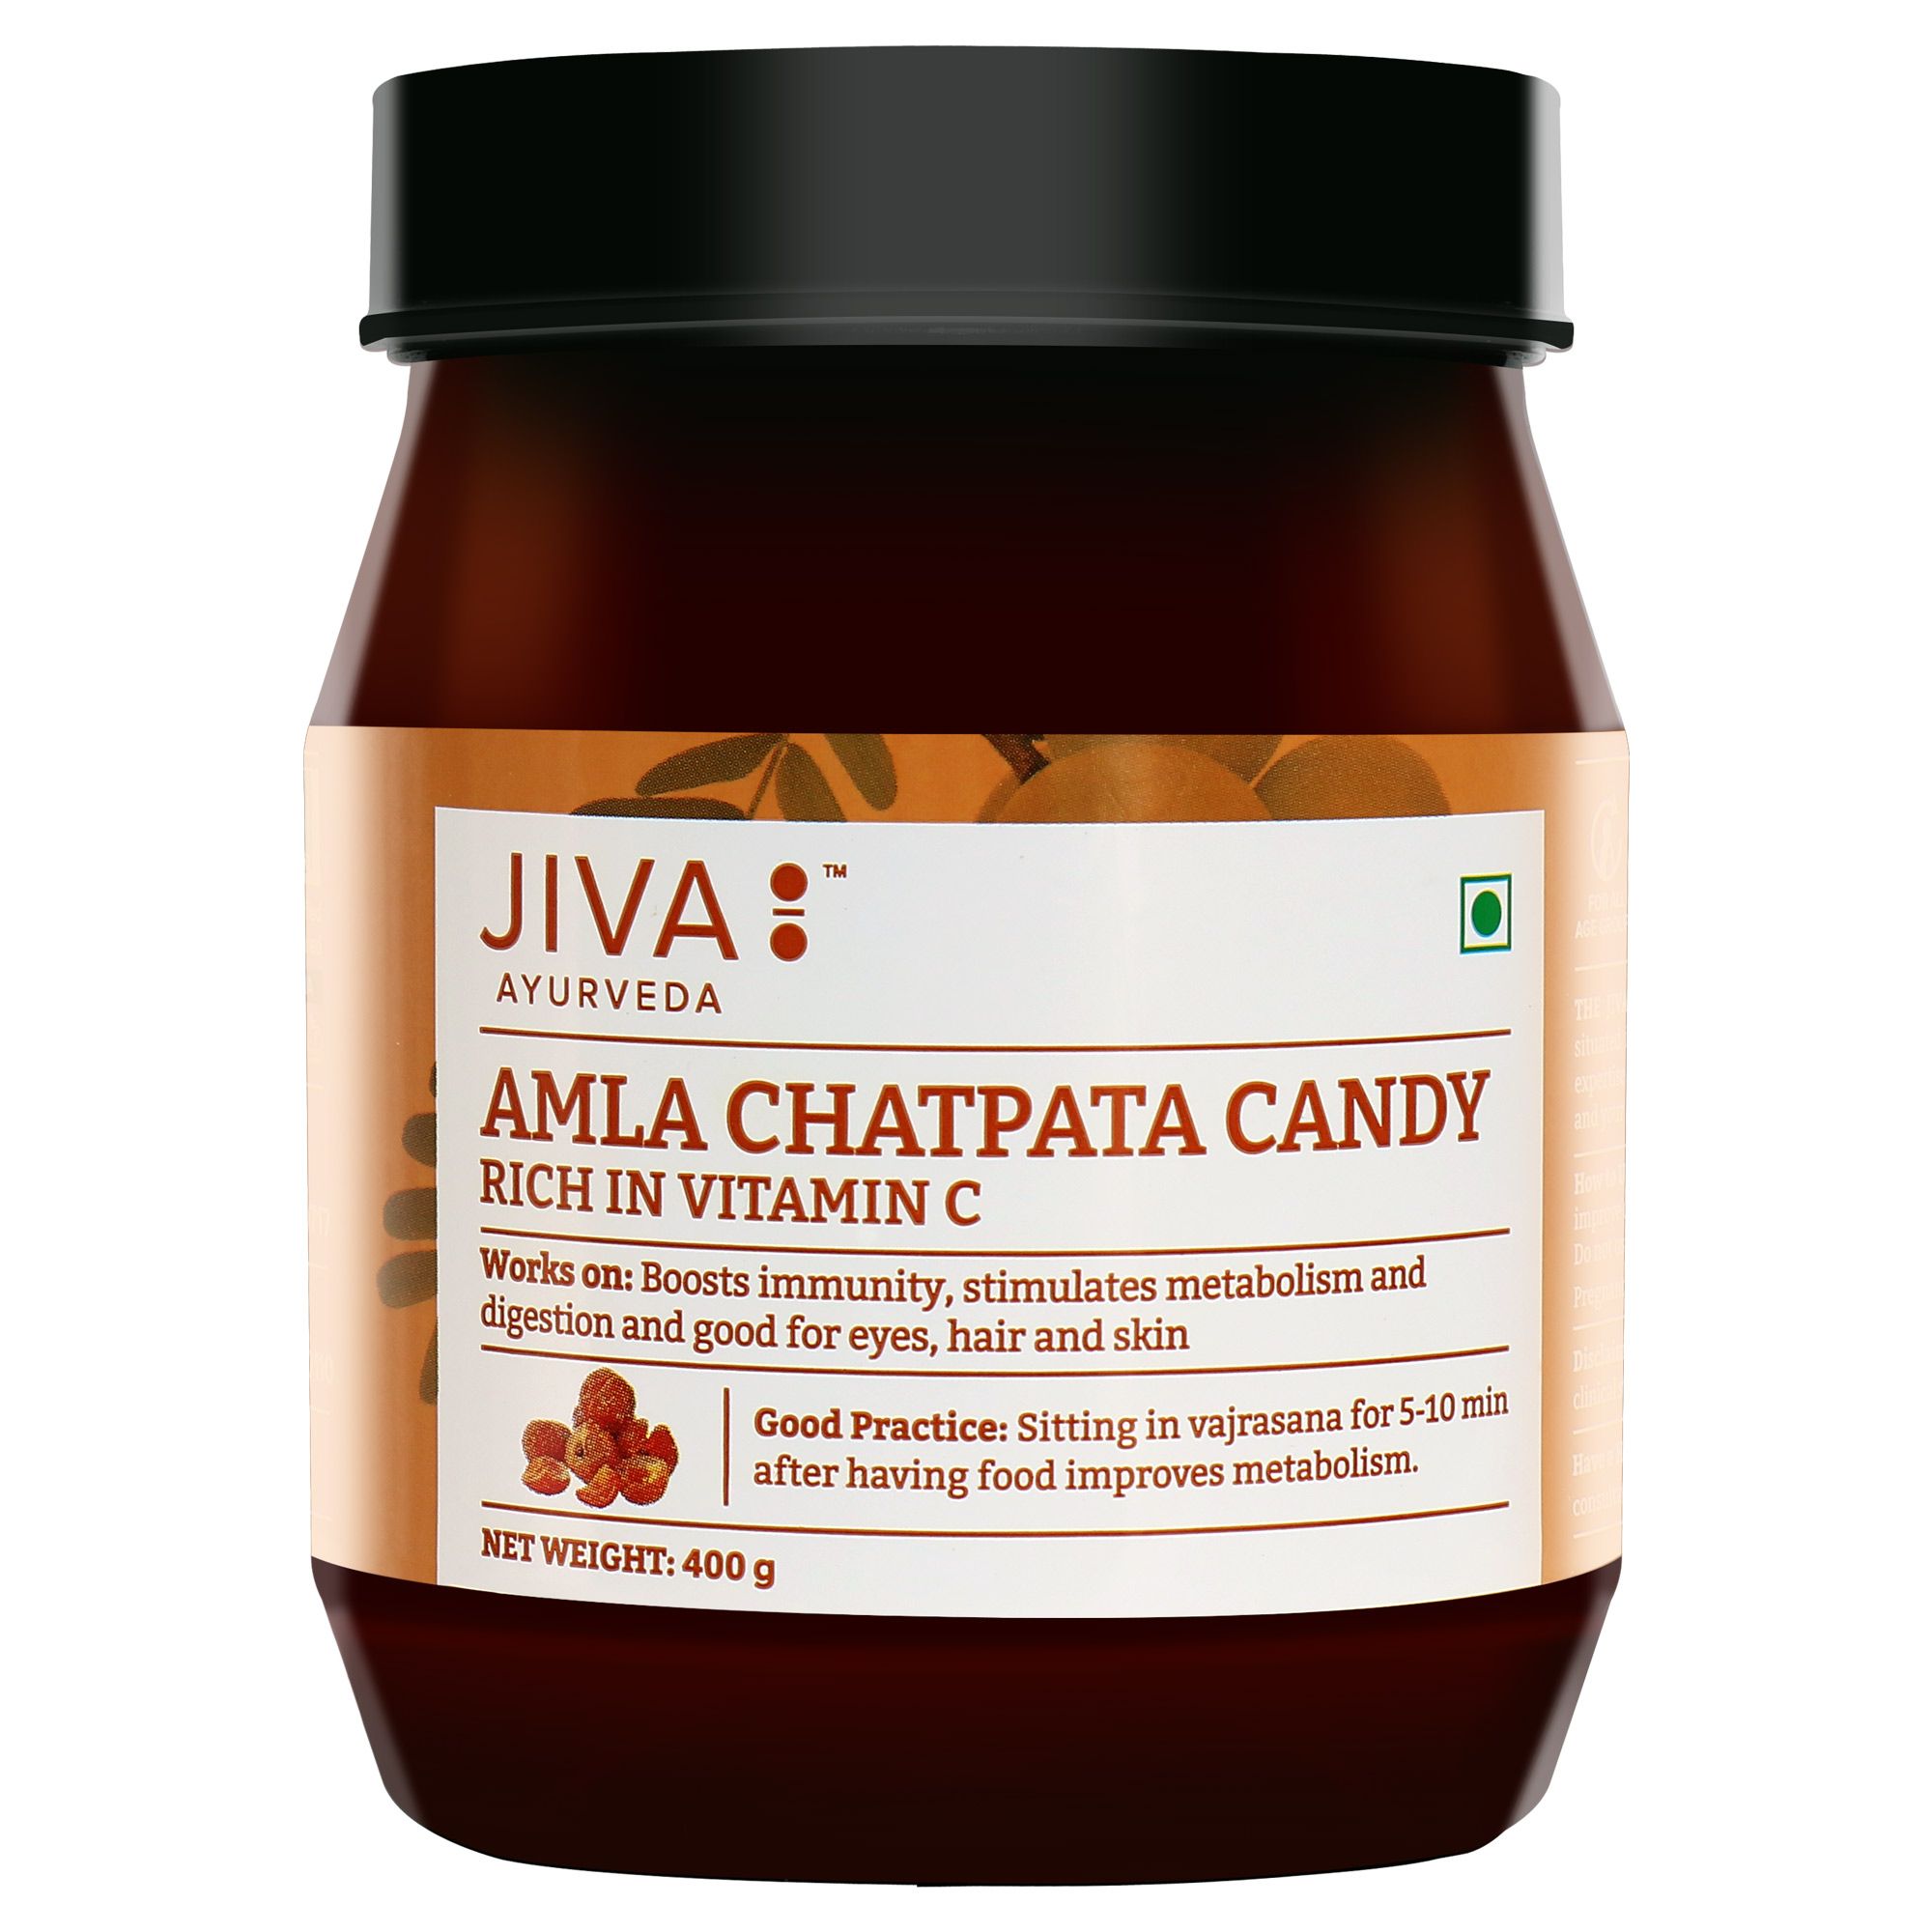 Buy Jiva Ayurveda Amla Chatpata Candy at Best Price Online